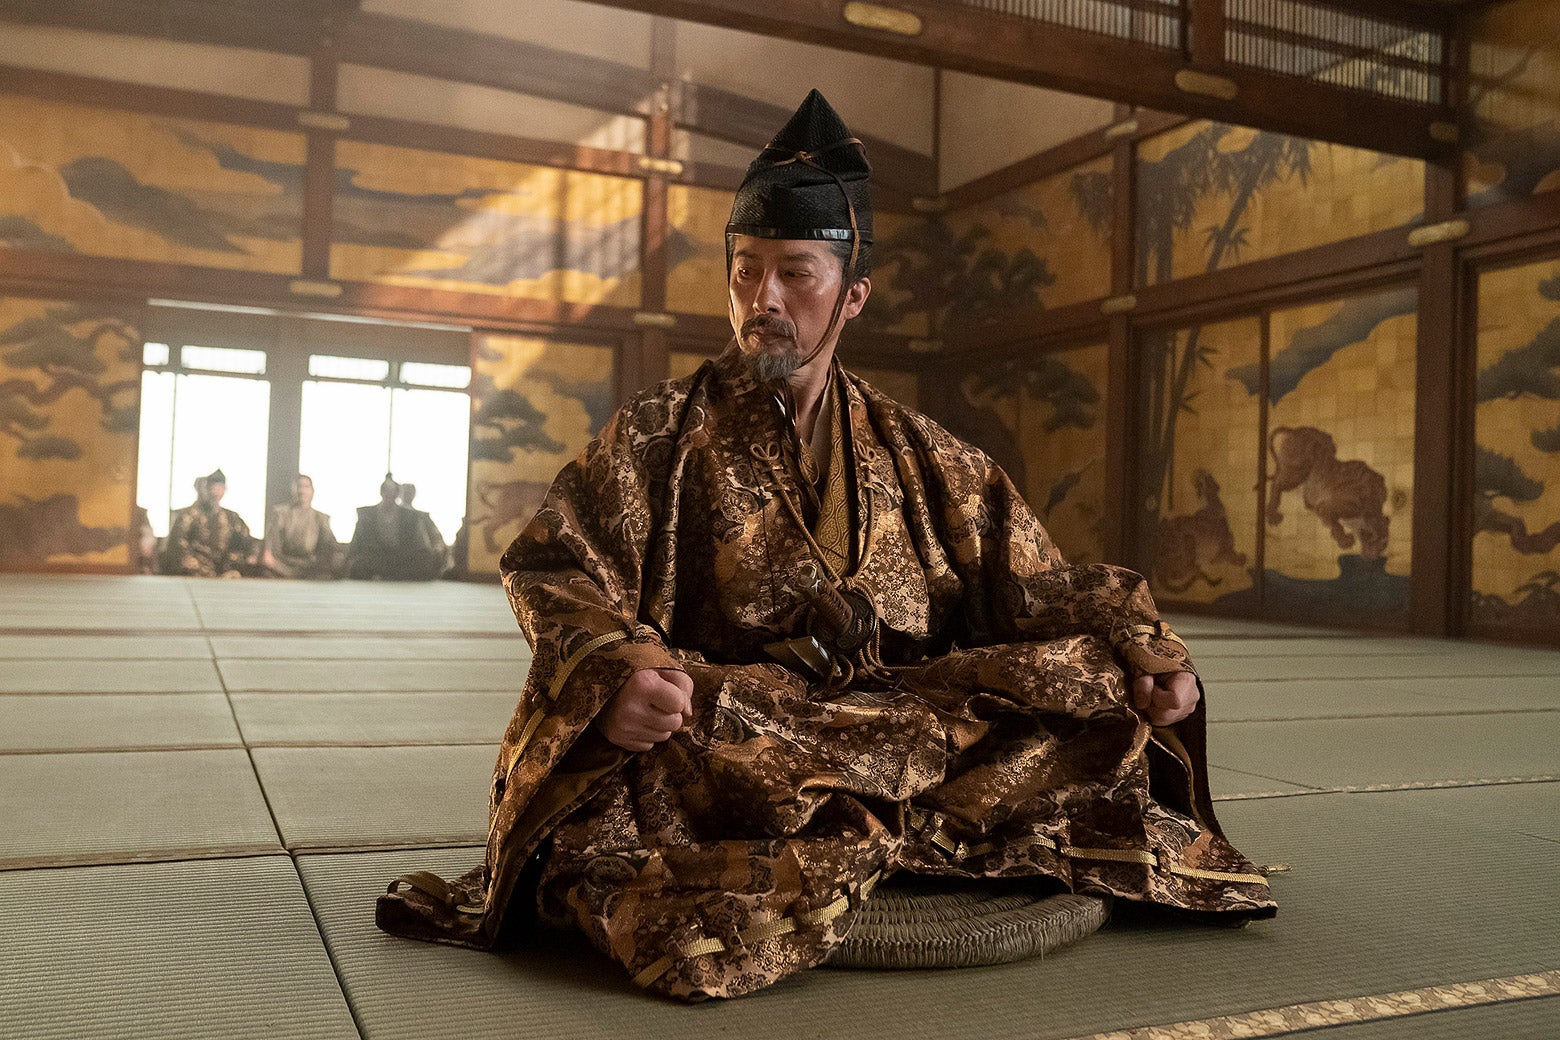 A gentleman in a silk robe sitting legs crossed in the middle of a dojo.